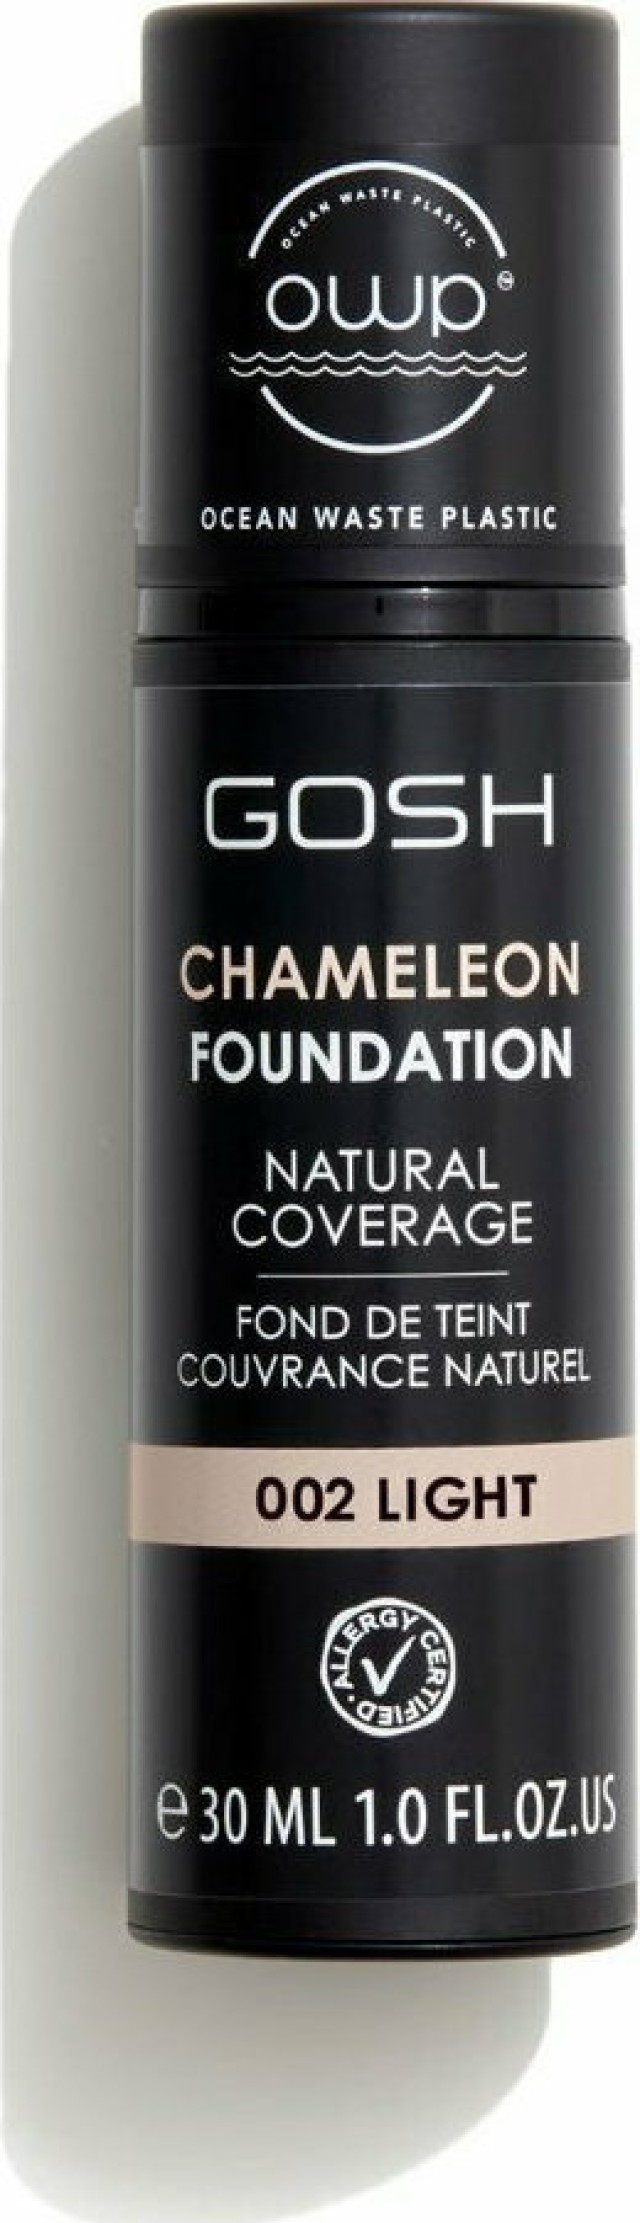 Gosh Chameleon Foundation Fond De Teint 002 Light Καλυπτικό Make up Ανοιχτή Απόχρωση 30ml